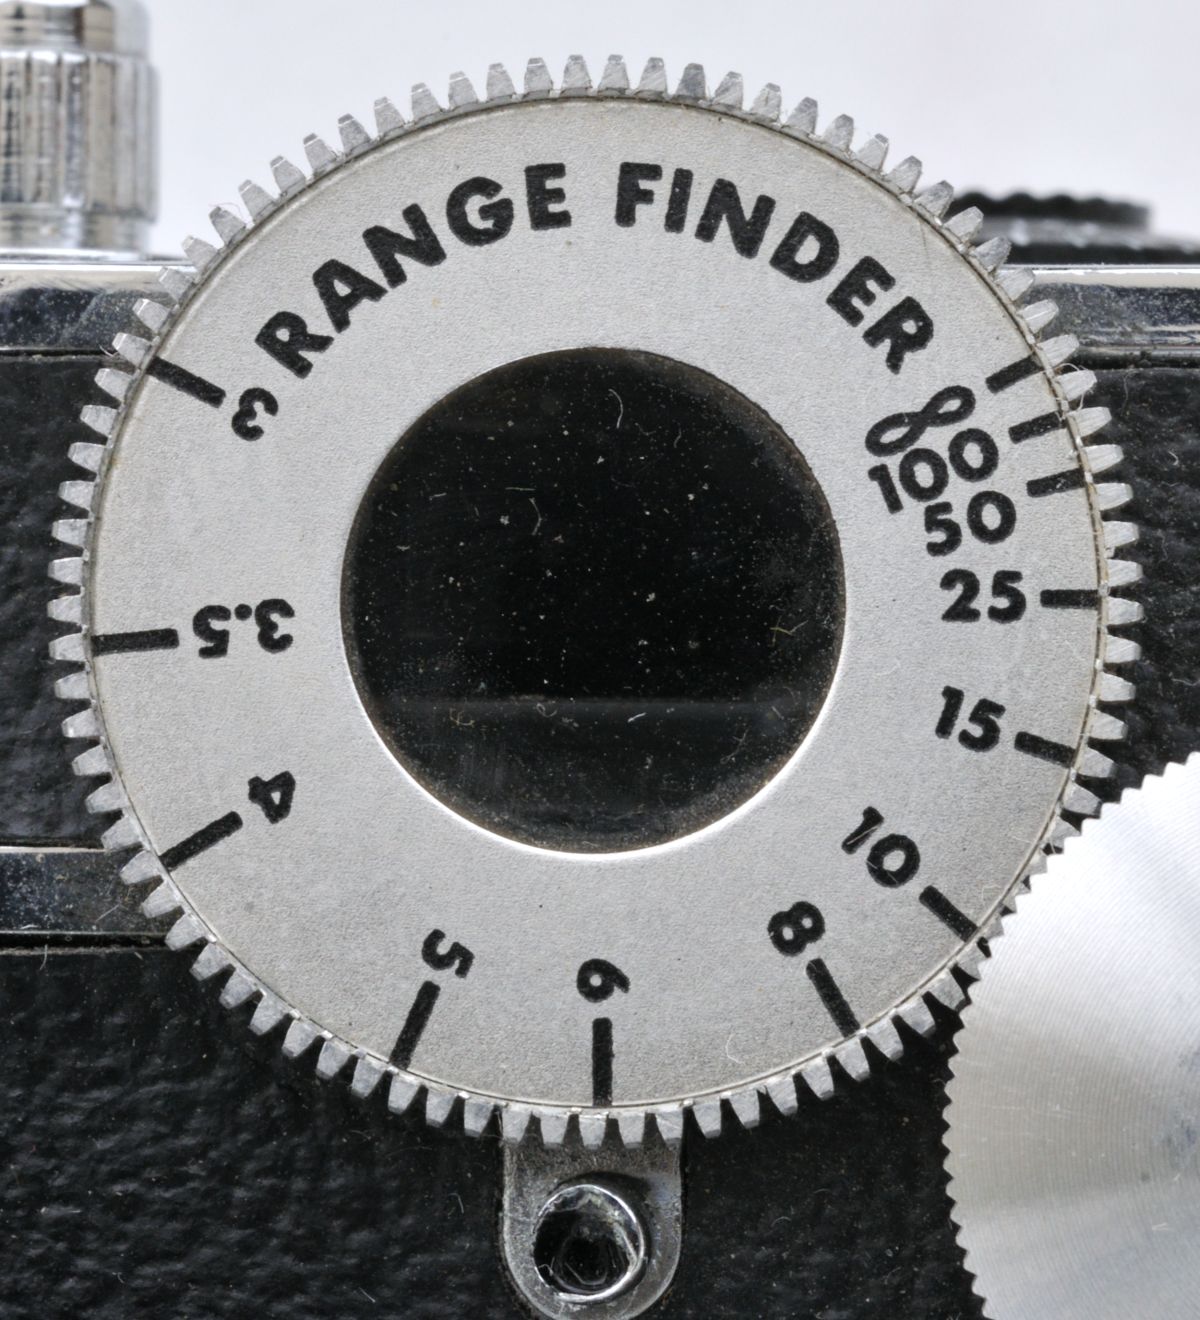 Pre-Colormatic Rangefinder